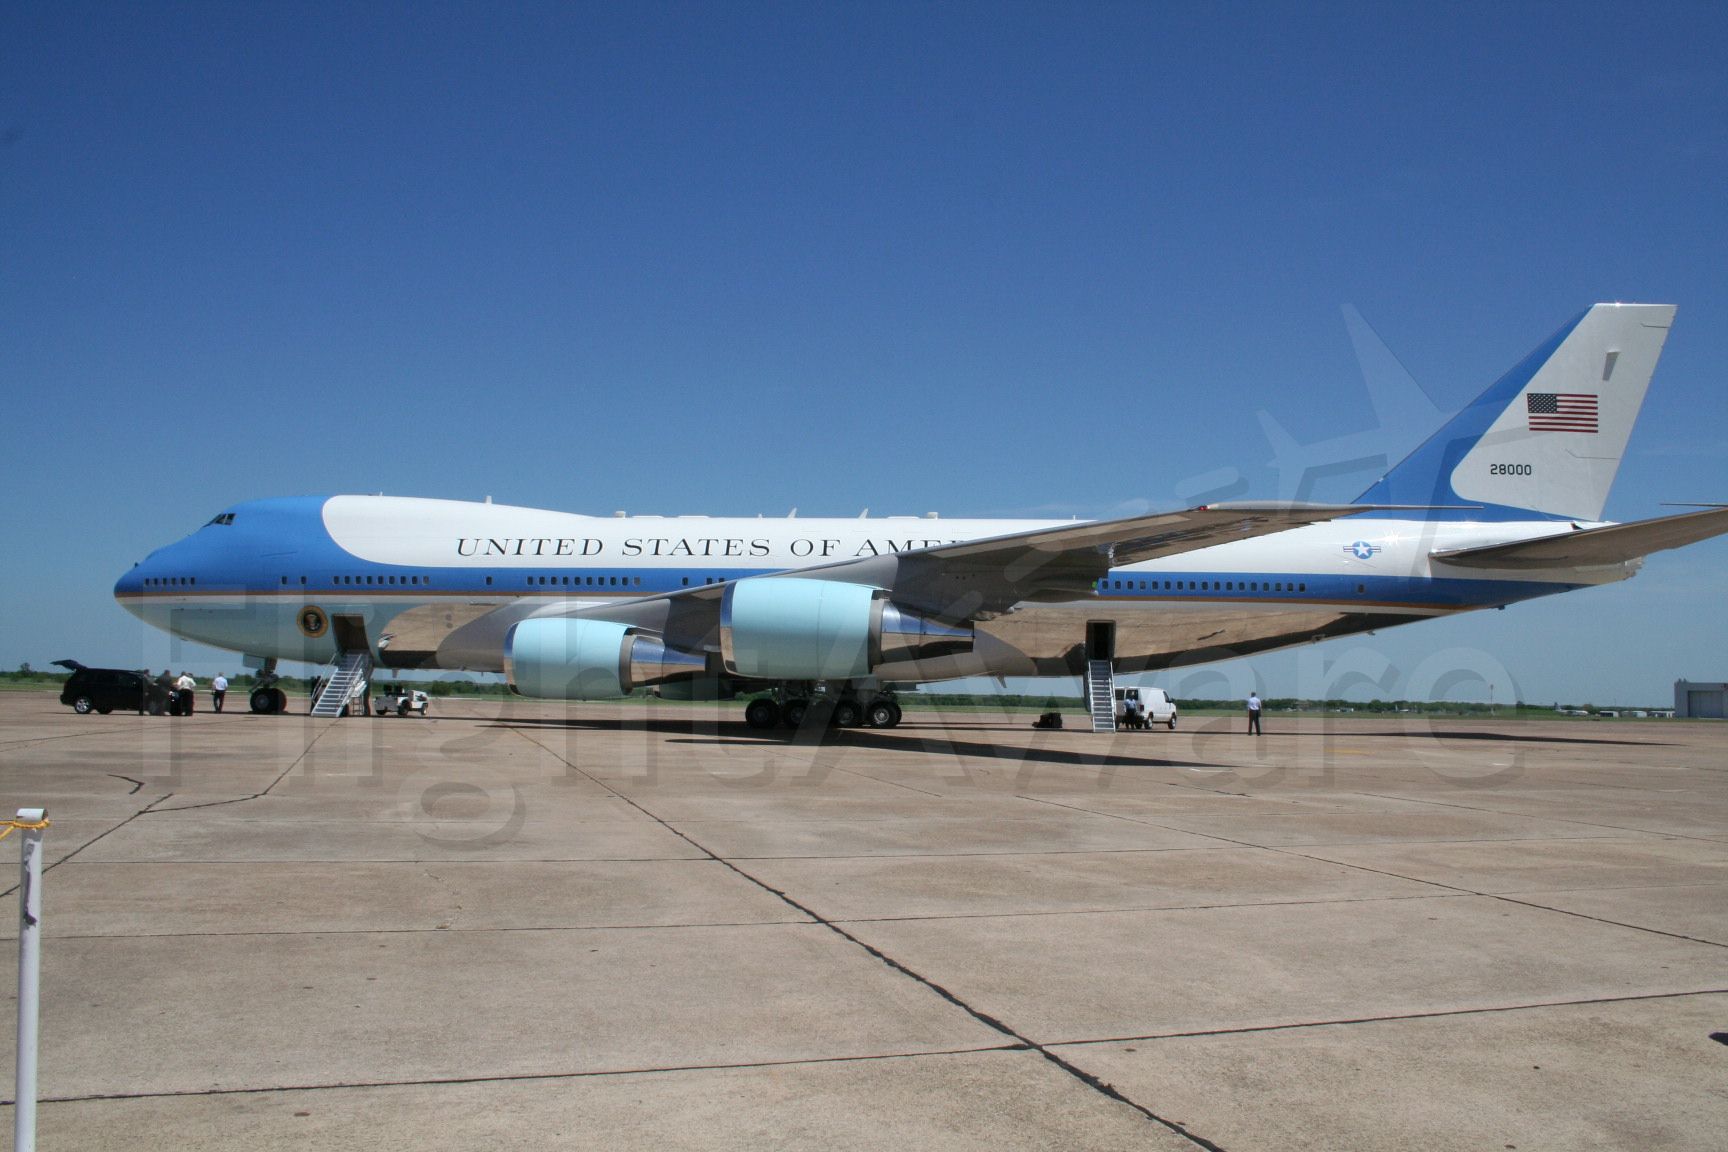 Boeing 747-200 (N28000) - TSTC WACO